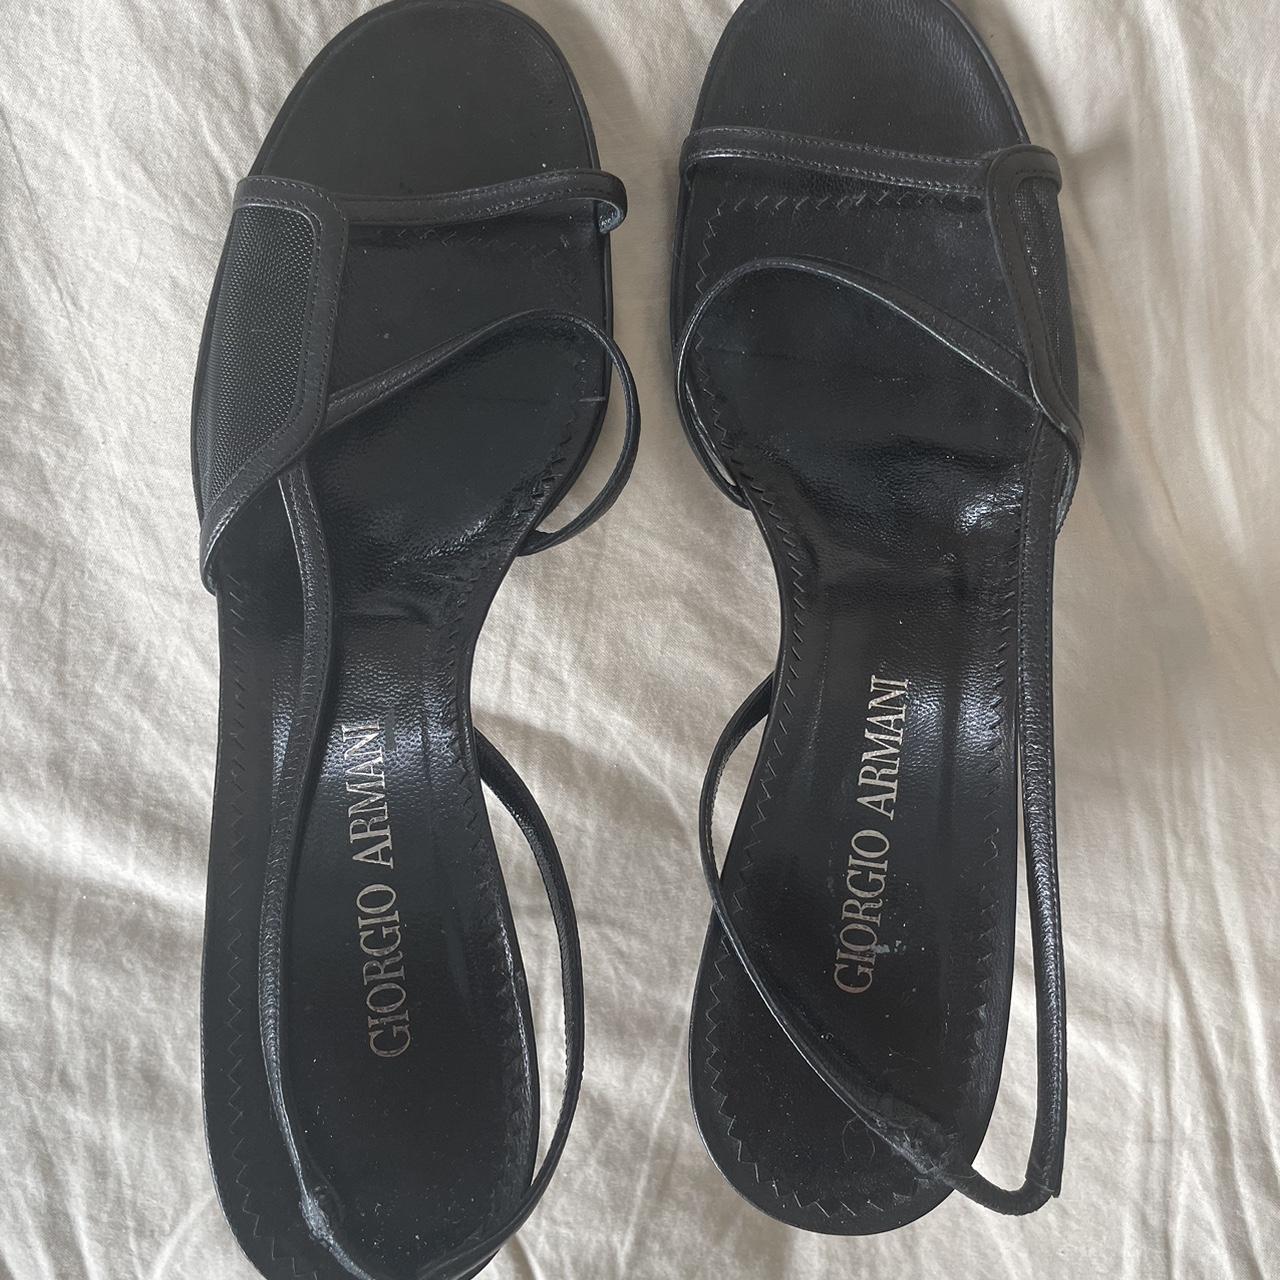 Armani Women's Sandals